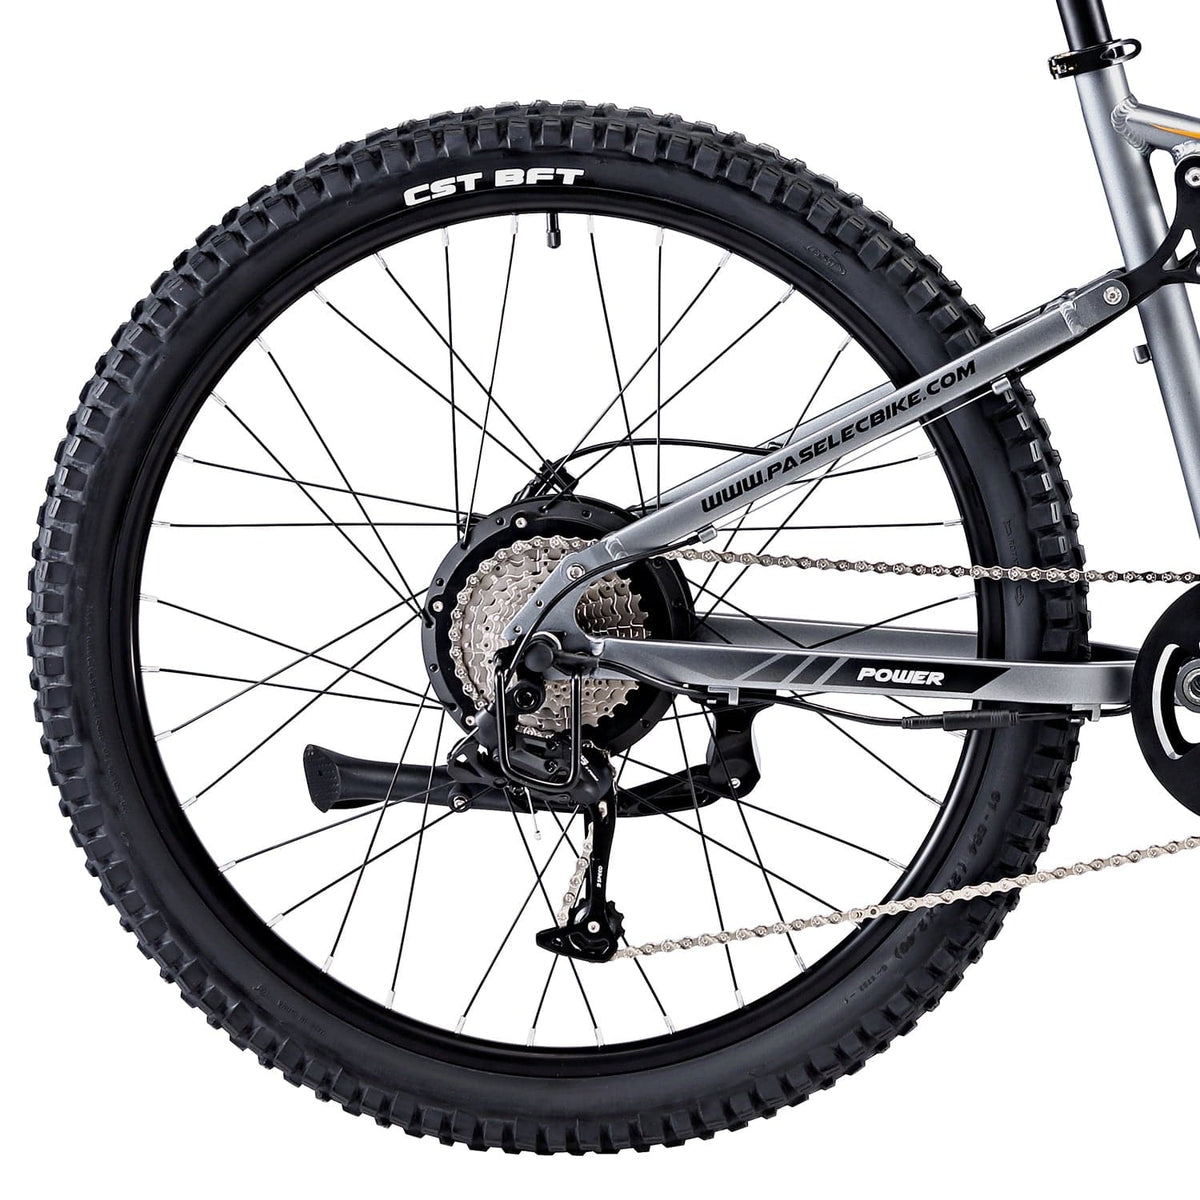 GS9 Electric Bike Rear Wheel set- SOF motor version